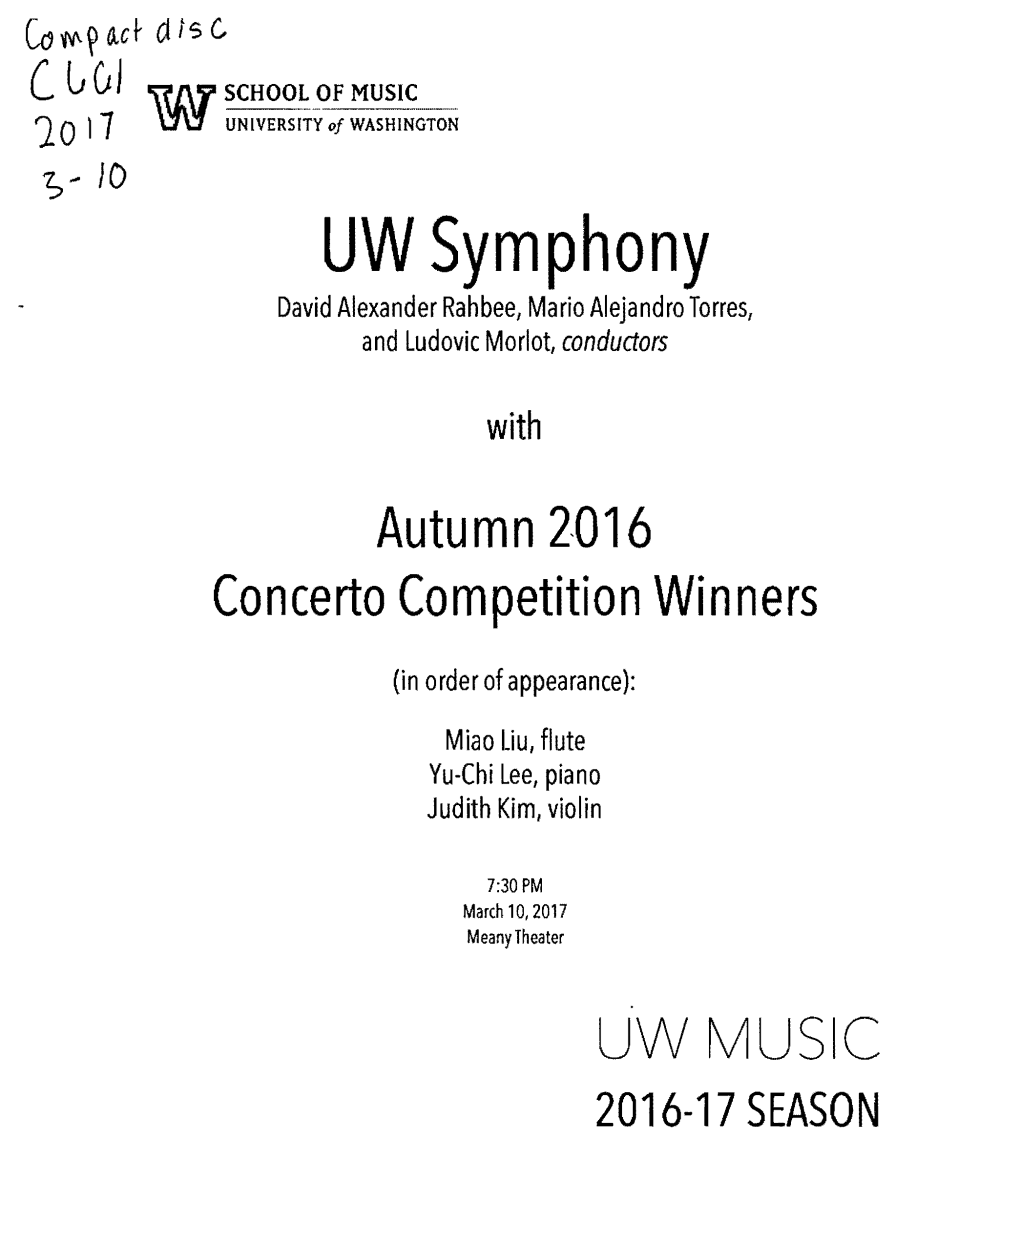 UW Symphony David Alexander Rahbee, Mario Alejandro Torres, and Ludovic Morlot Conductors